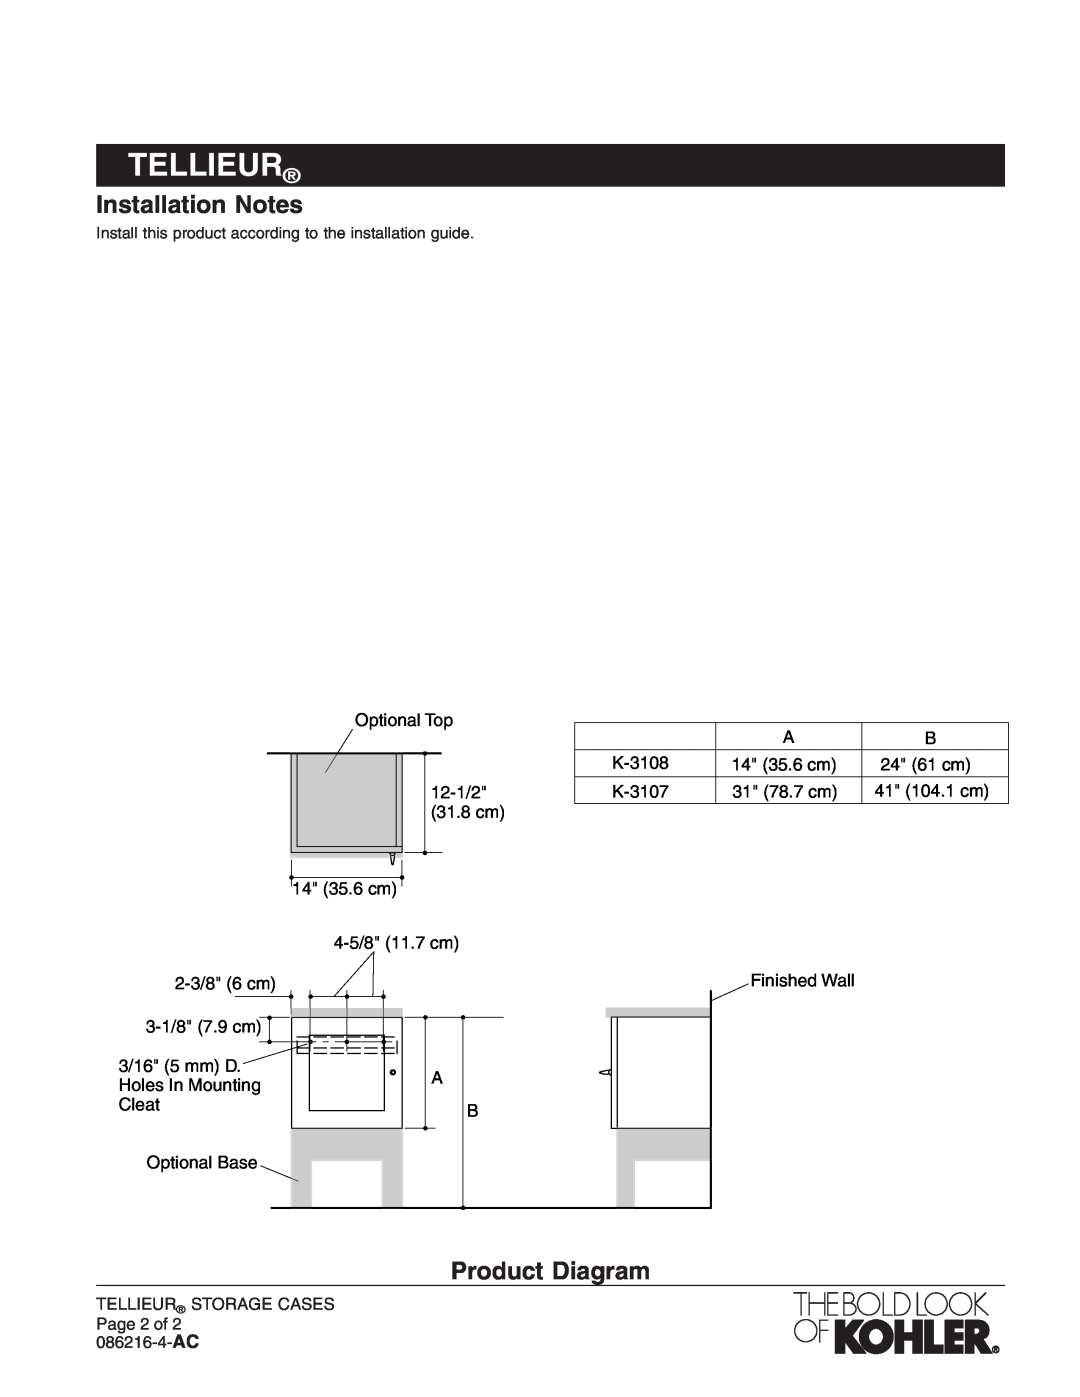 Kohler K-3108, K-3107 manual Installation Notes, Product Diagram, TELLIEUR STORAGE CASES Page 2 of 086216-4-AC, Tellieur 